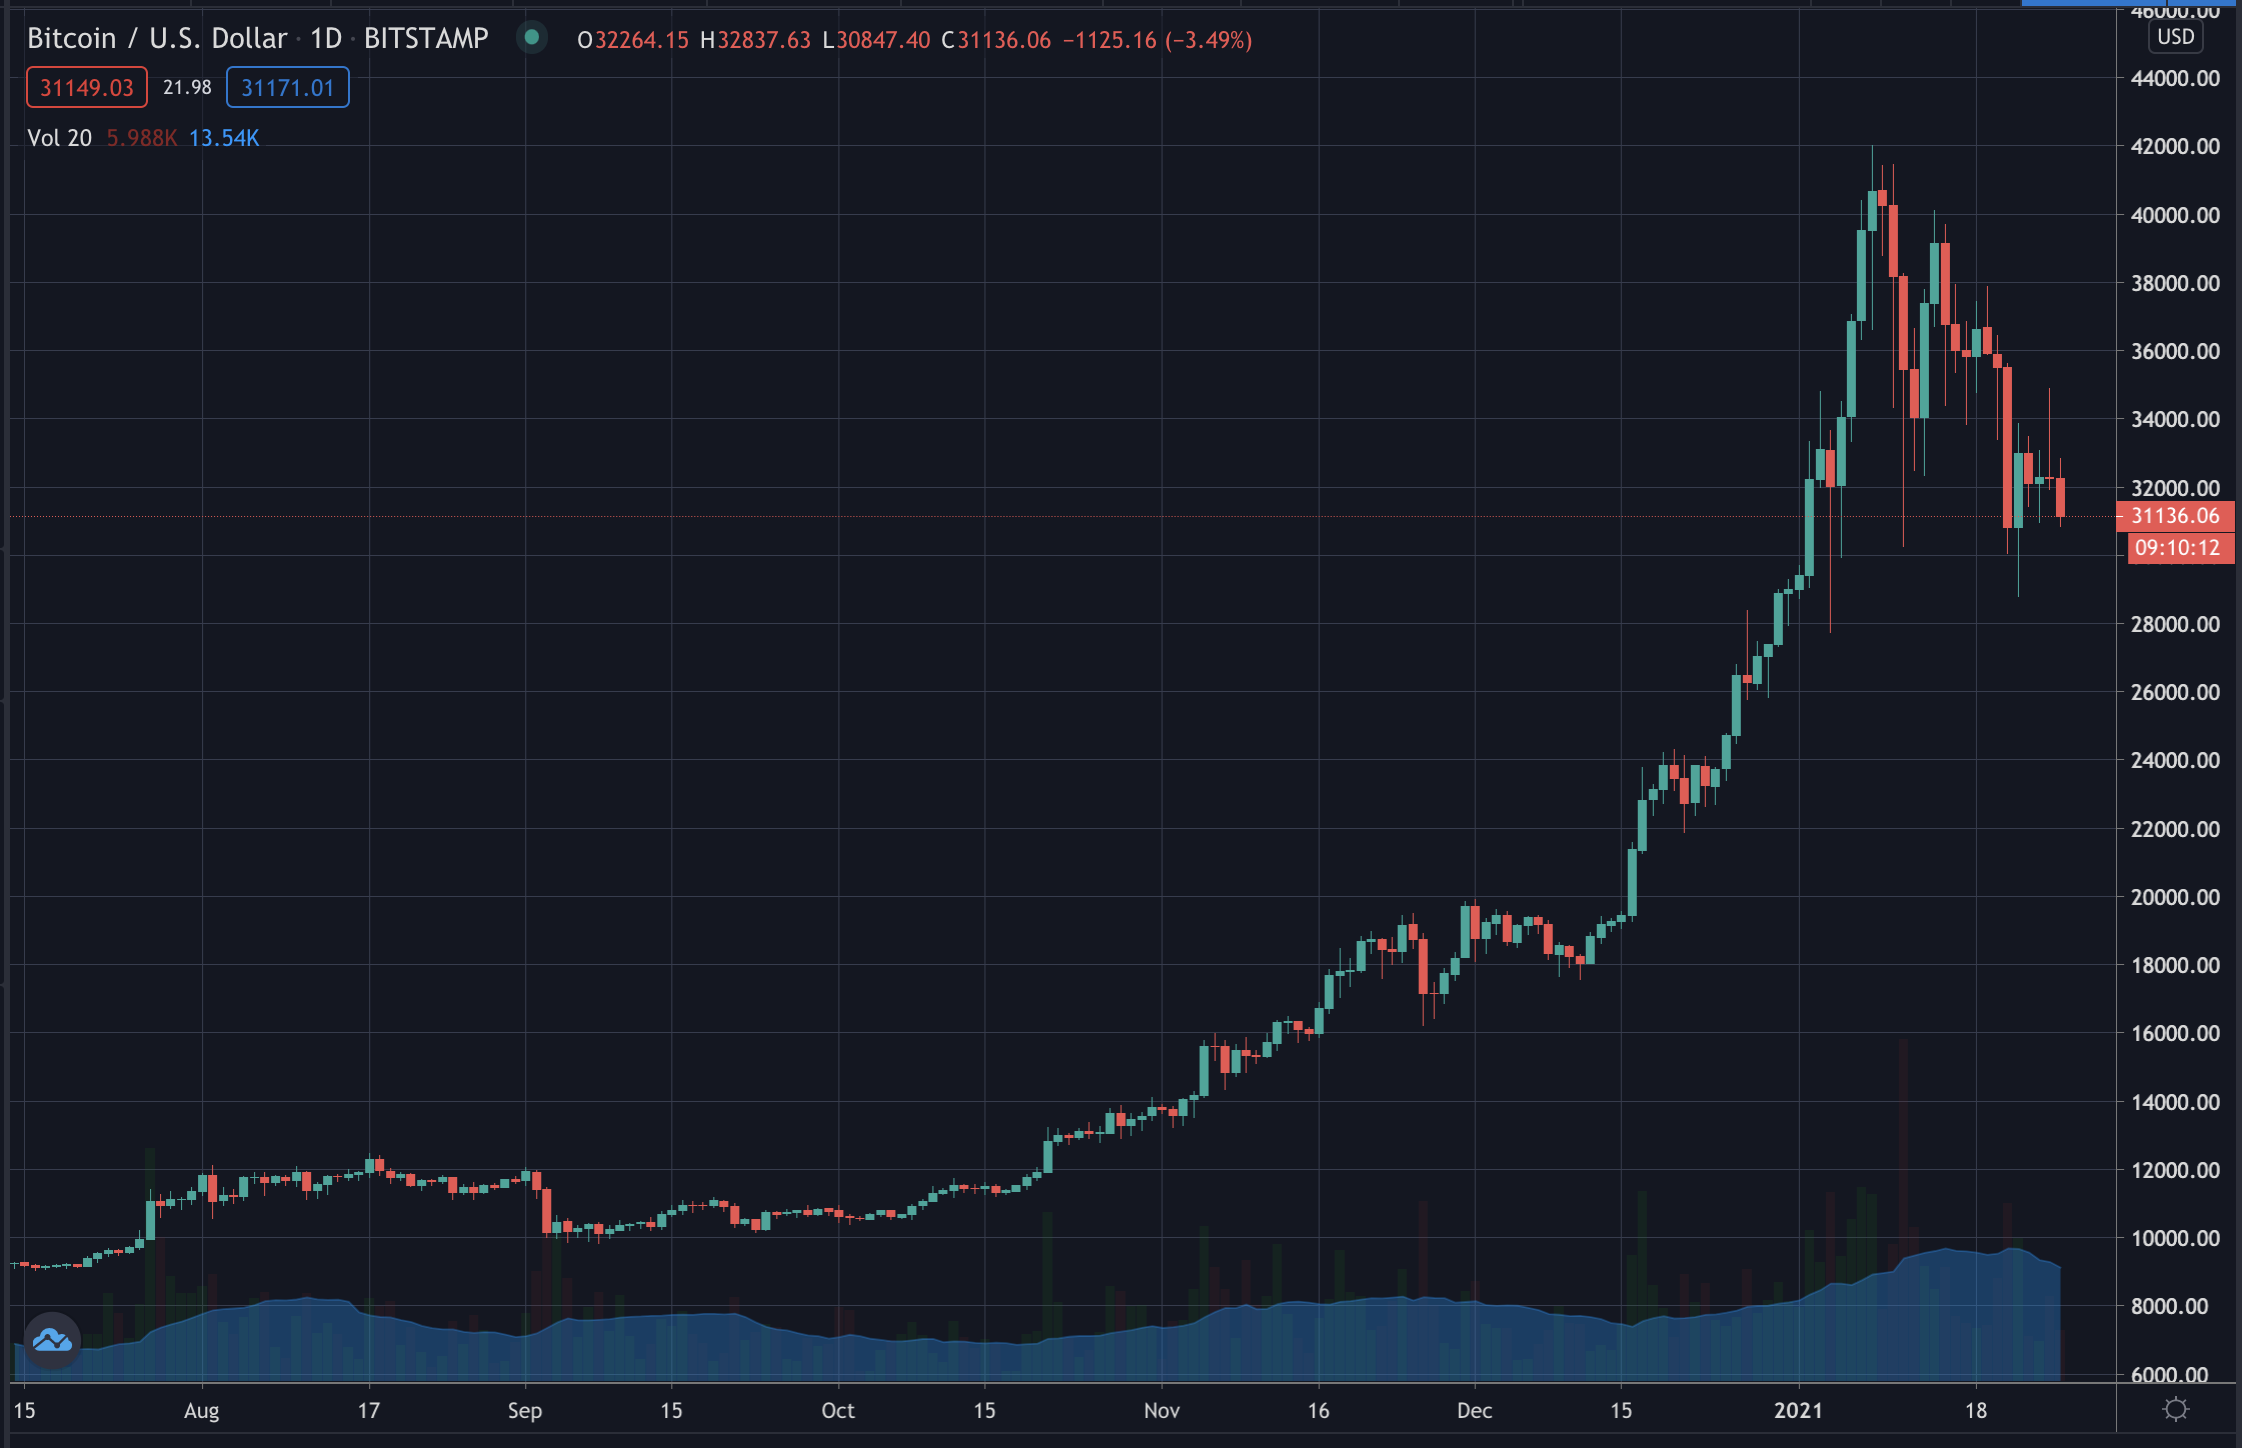 Bitcoin's price, Jan 2021